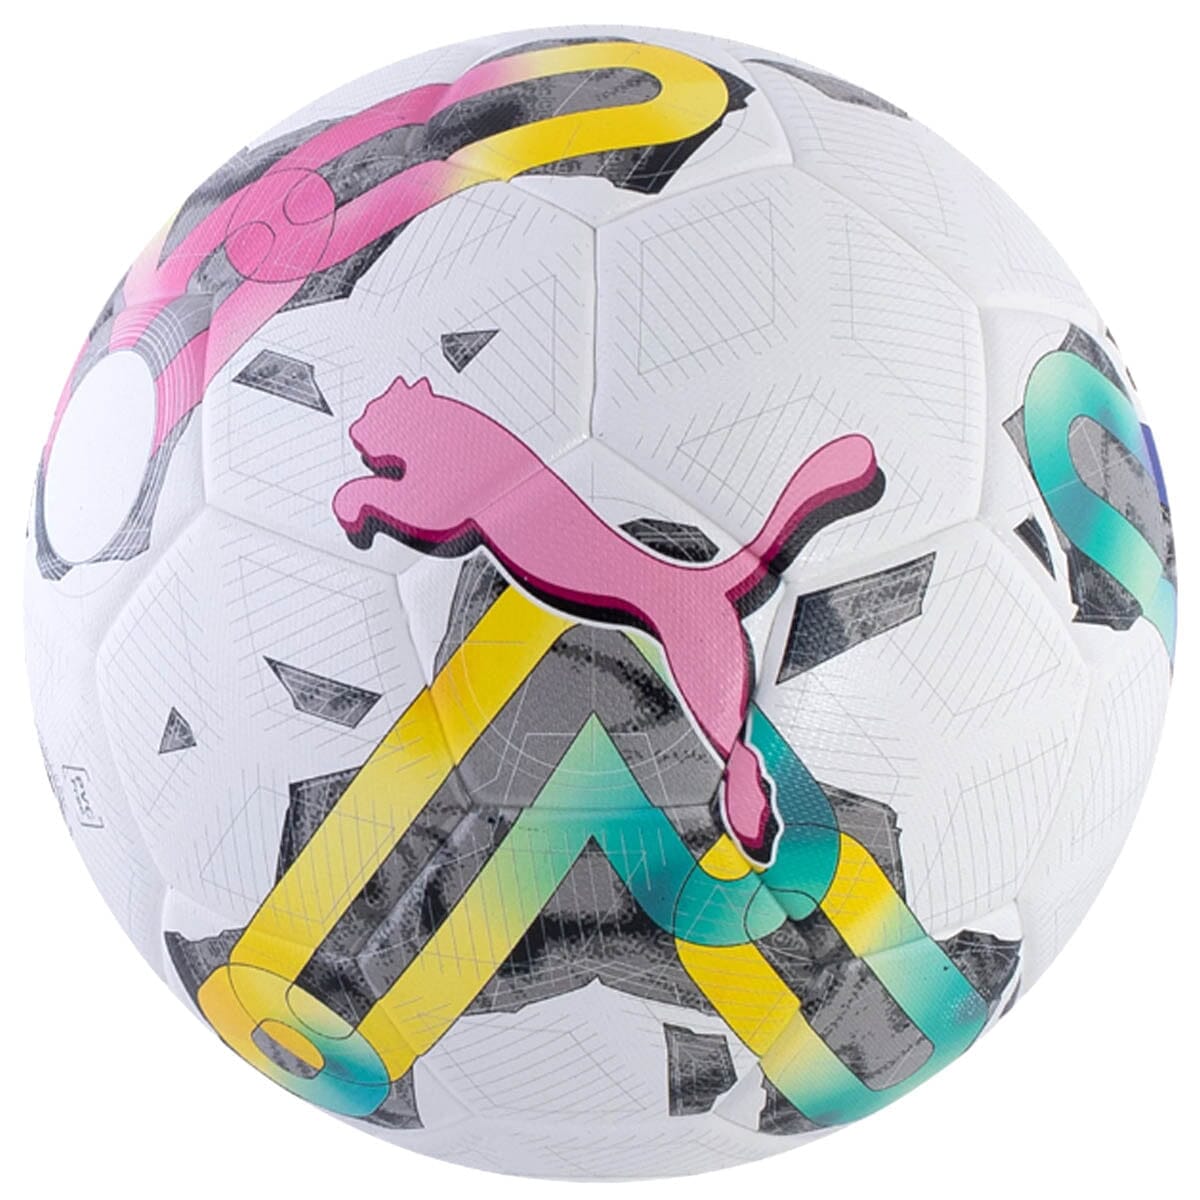 Puma Orbita 3 NHFS Soccer Ball FIFA Quality | 08401501 Soccer Ball Puma 5 White 